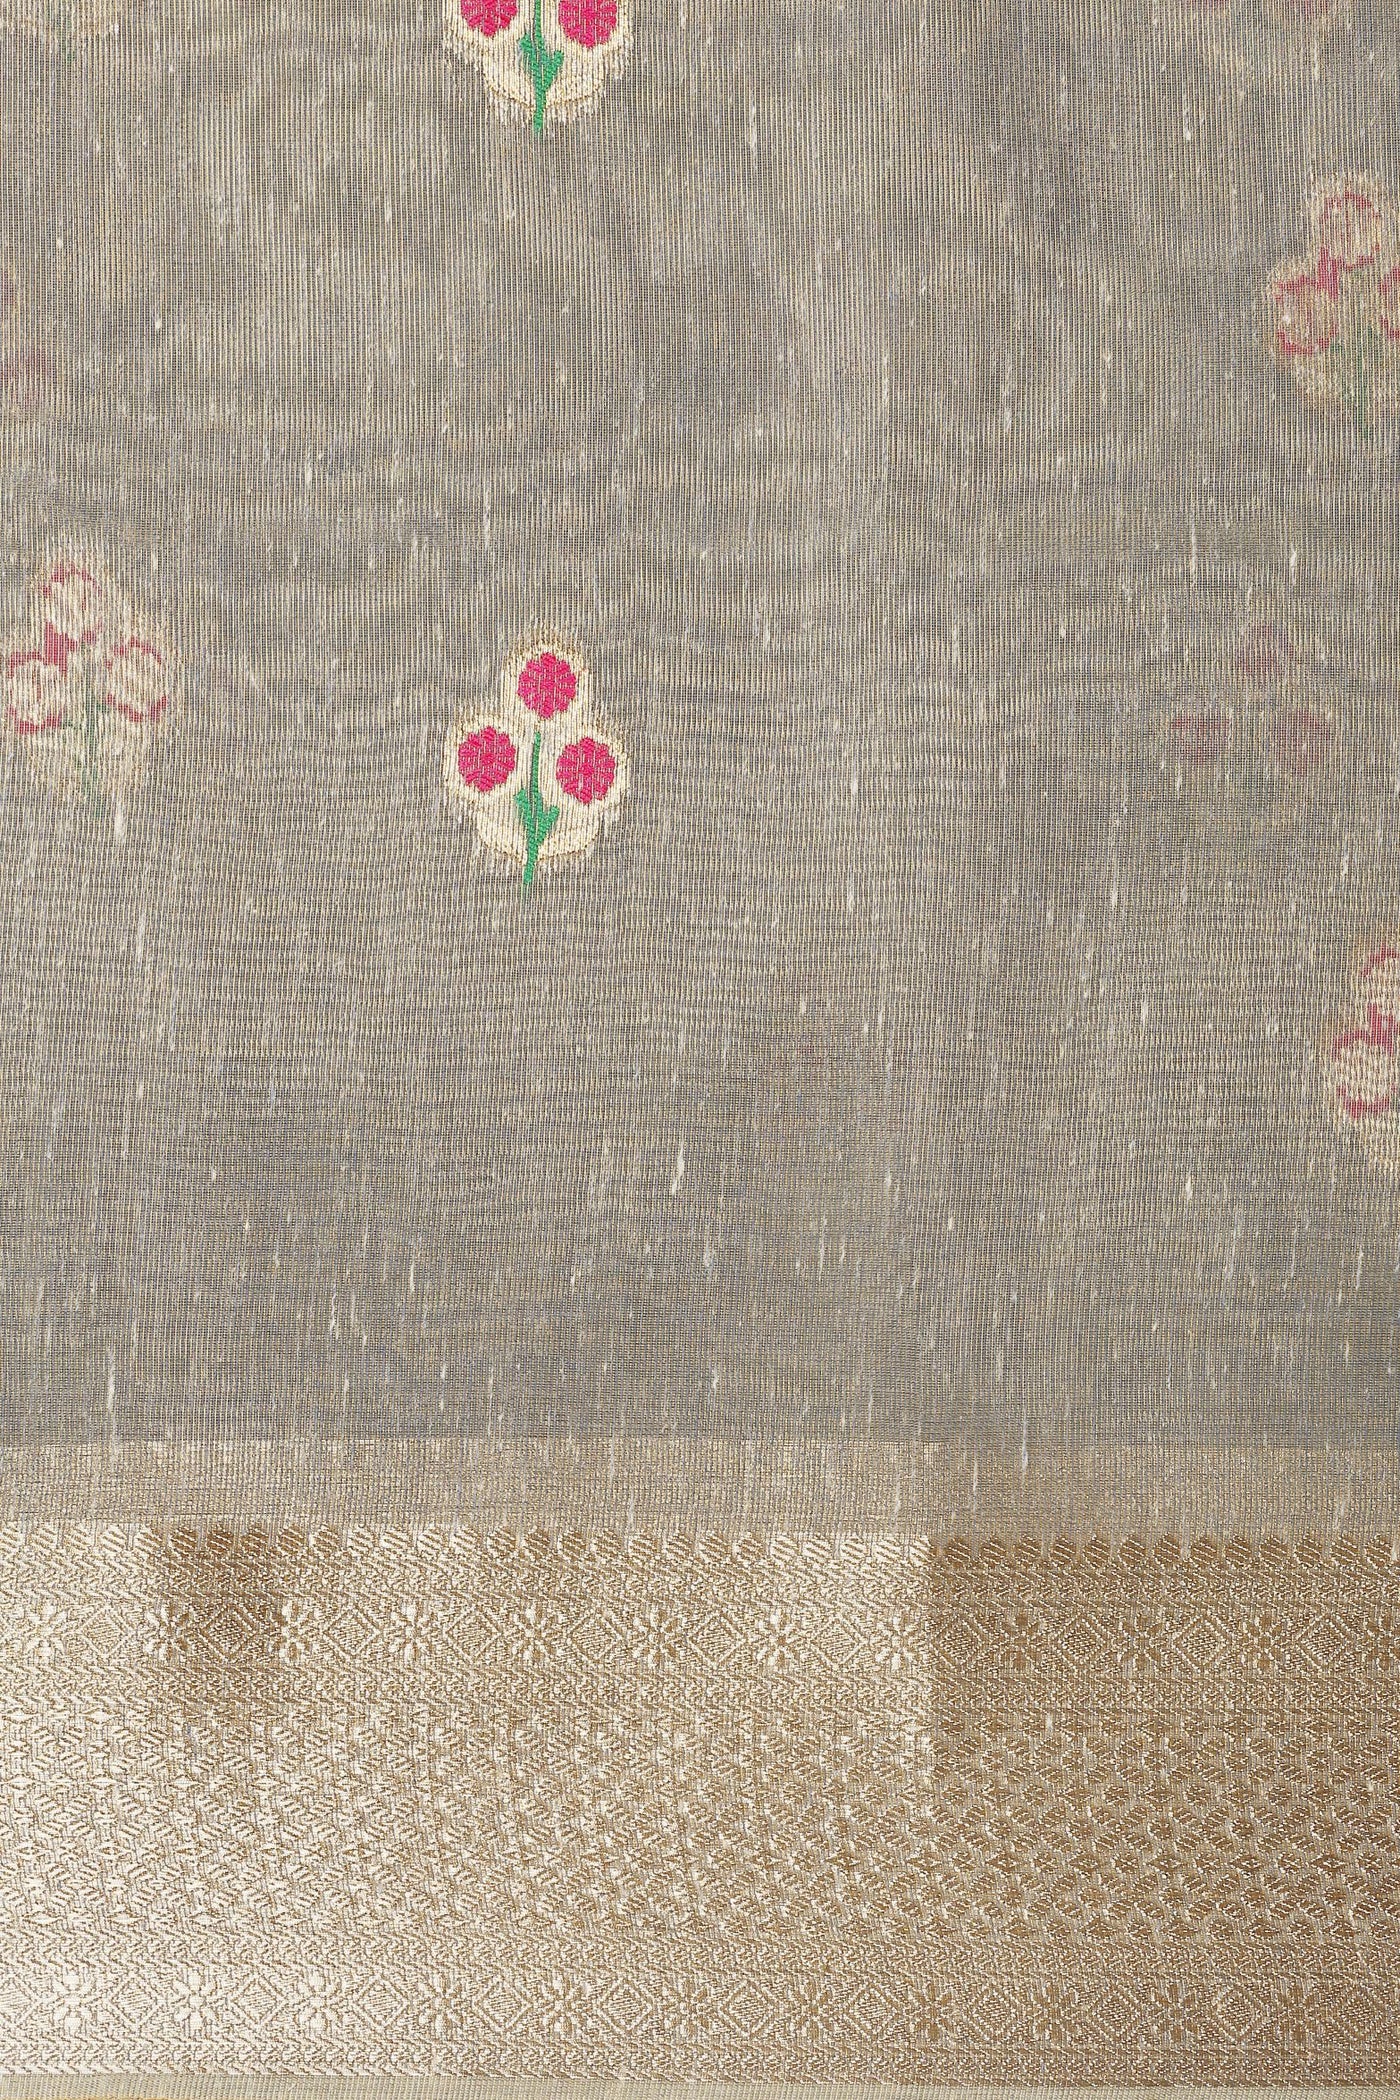 Graceful Grey Cotton Silk Saree with Thread Work and Zari"